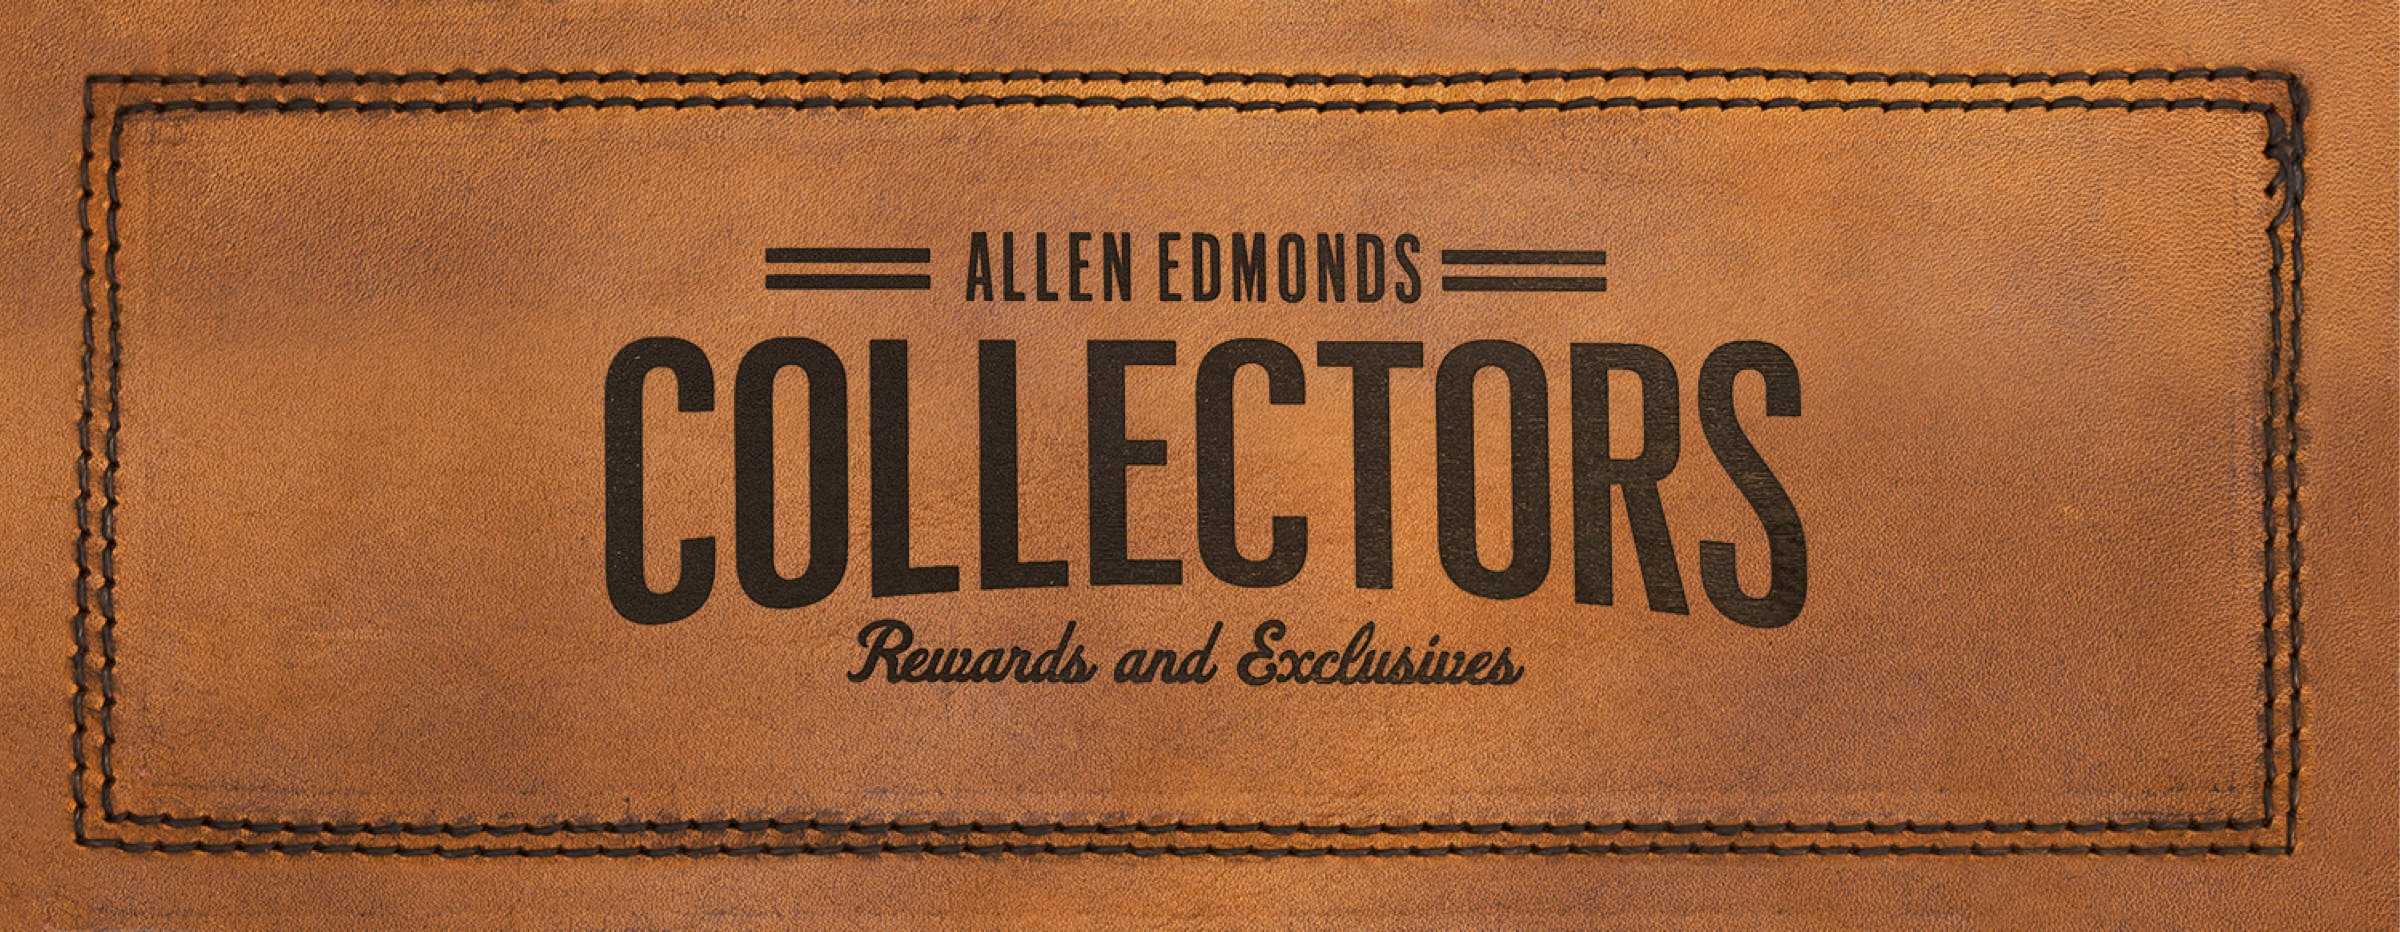 Allen Edmonds Collectors - Rewards and Exclusives